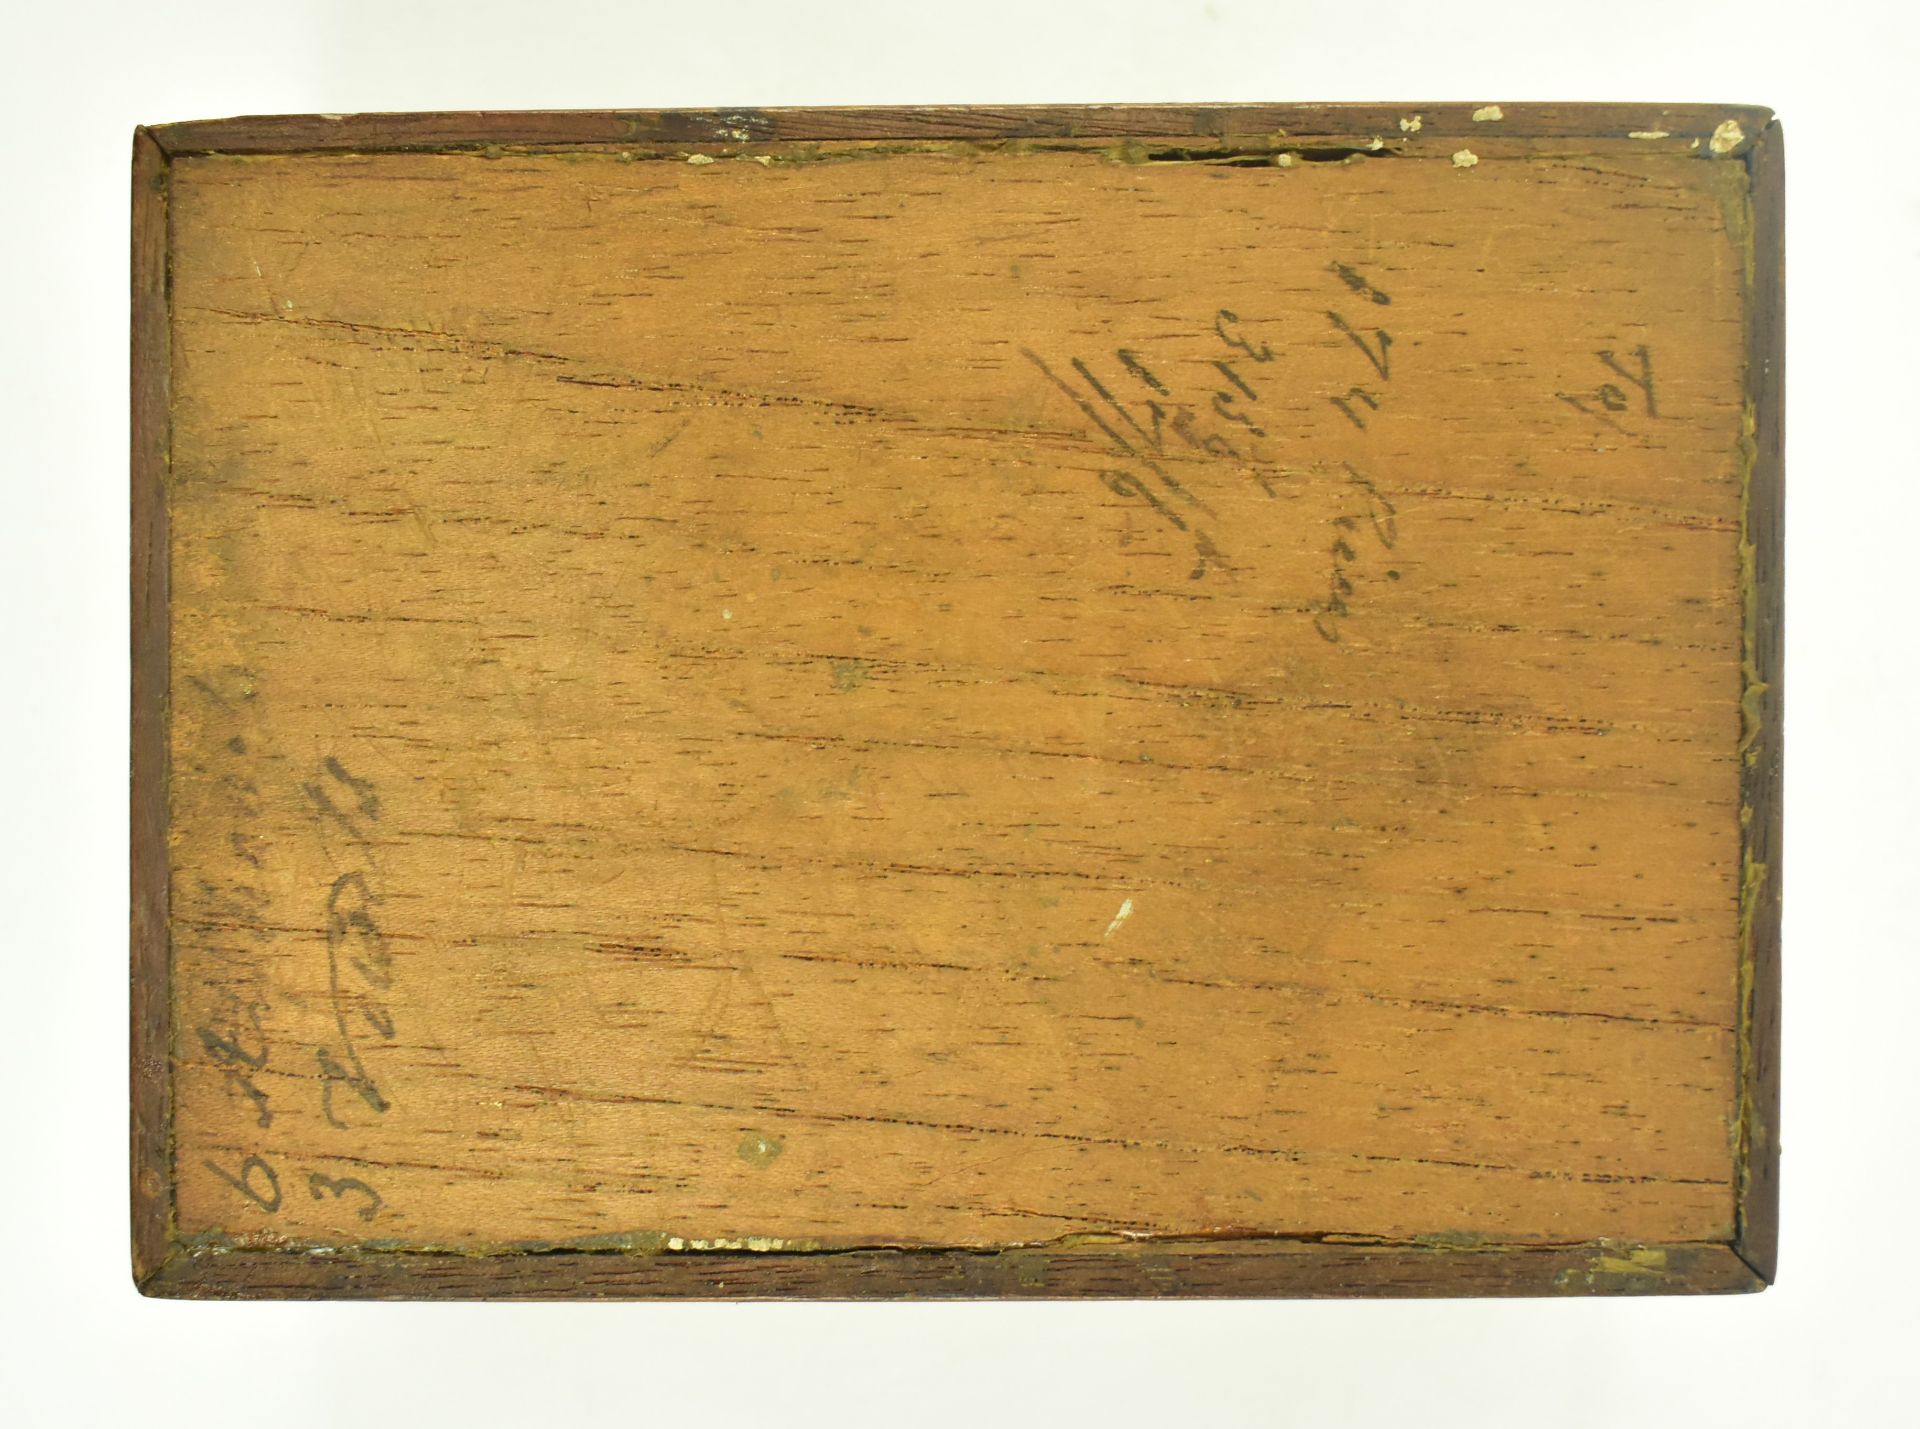 EARLY 19TH CENTURY BONE SPELLING ALPHABET IN CASE - Image 4 of 4